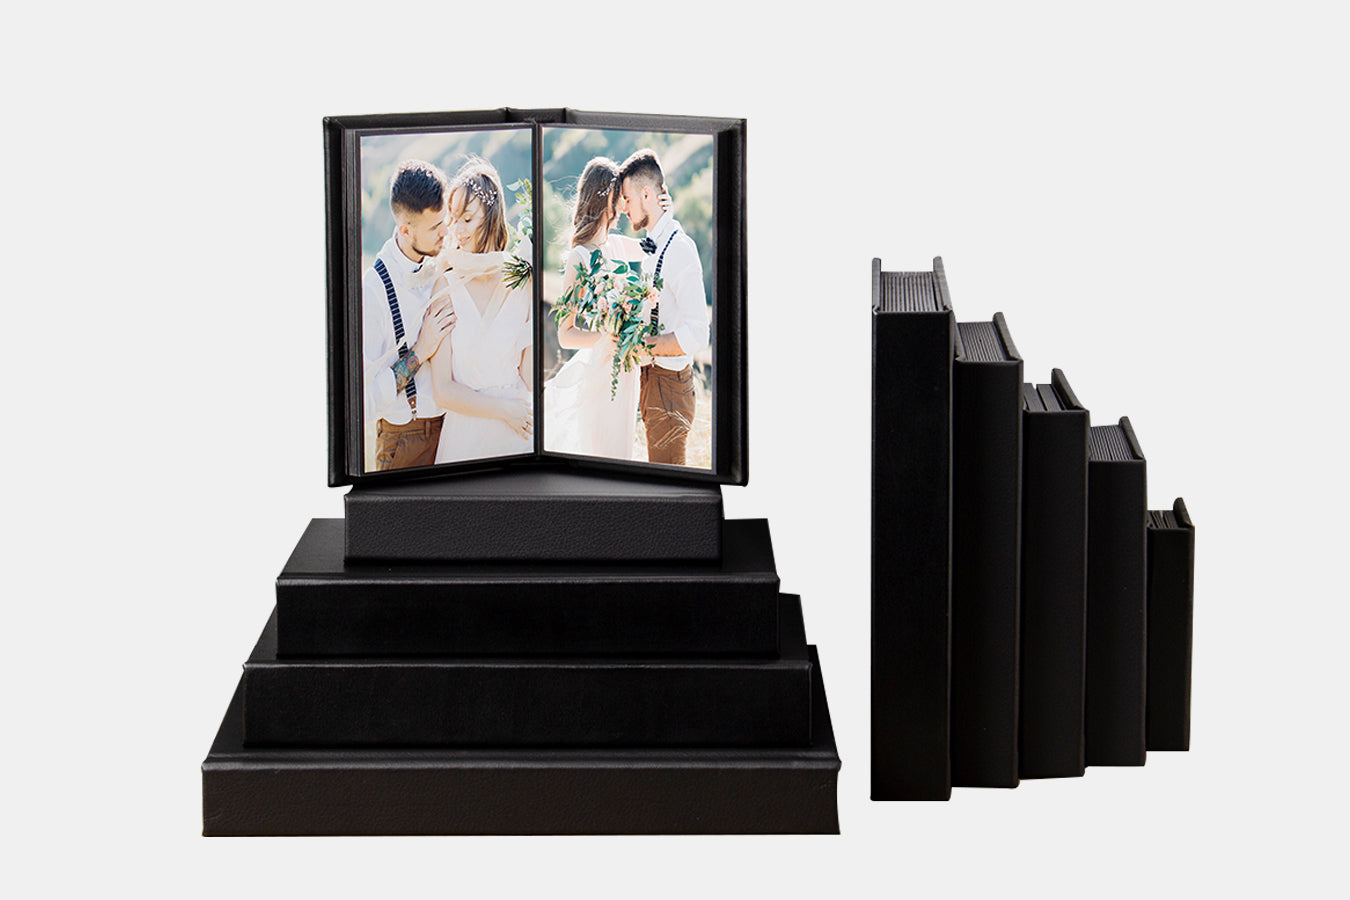 wholesale black leather self-stick photo albums for professional wedding photographers